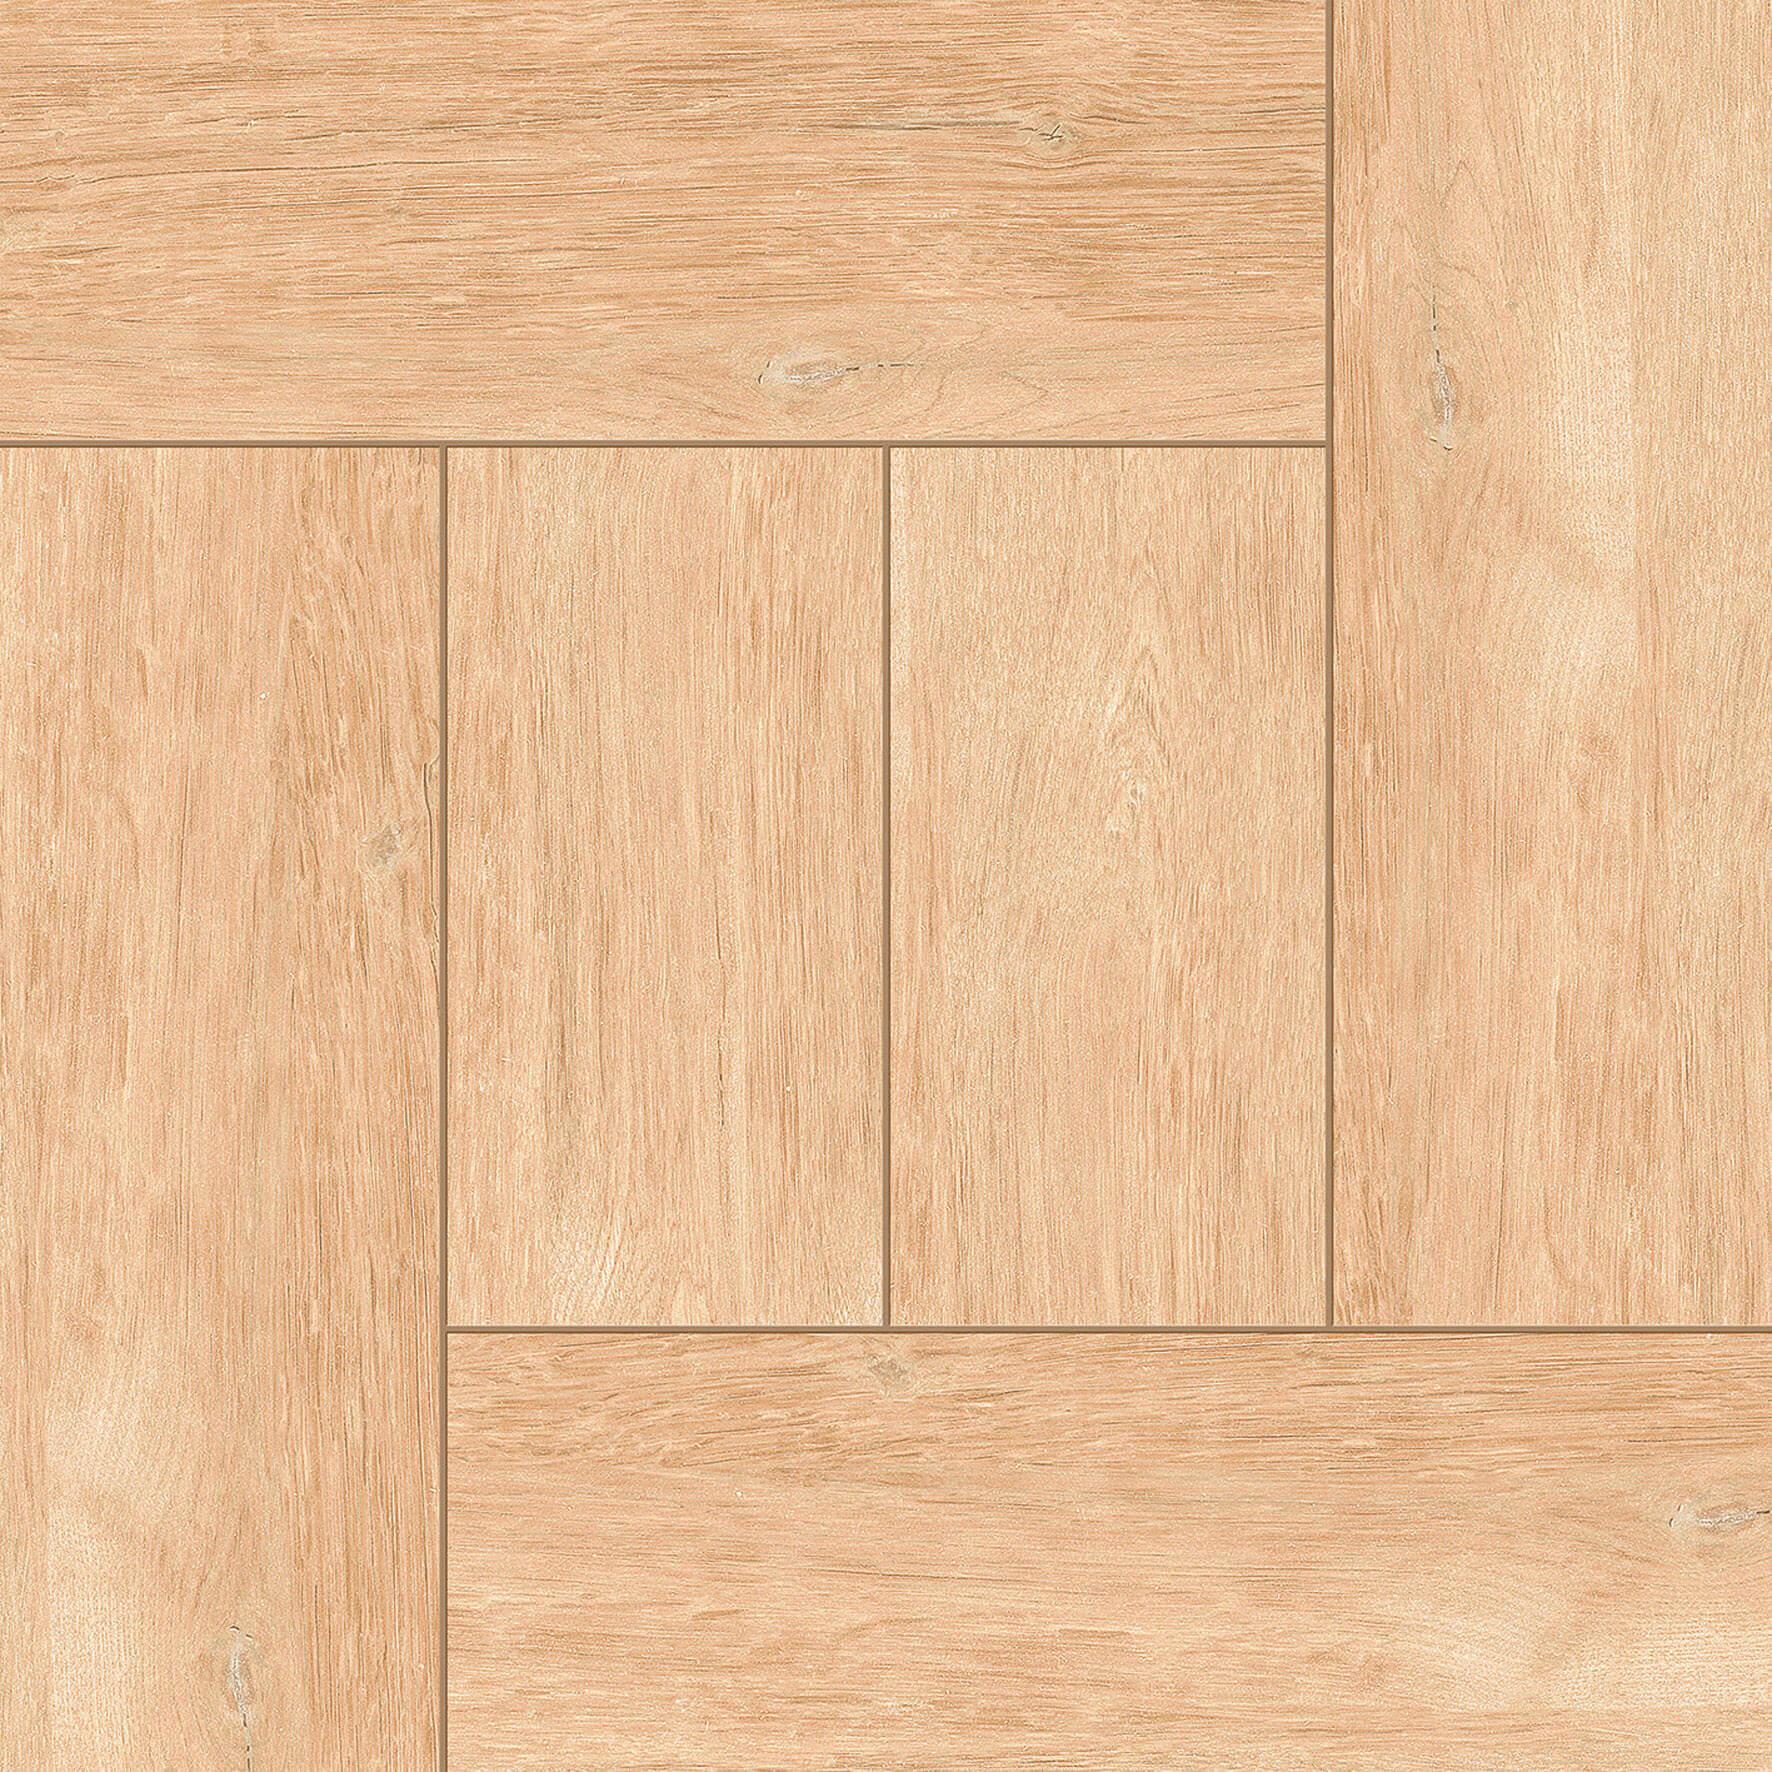 Beige Tiles for Living Room Tiles, Bedroom Tiles, Balcony Tiles, Accent Tiles, Terrace Tiles, Hospital Tiles, Automotive Tiles, High Traffic Tiles, Bar/Restaurant, Commercial/Office, Outdoor/Terrace